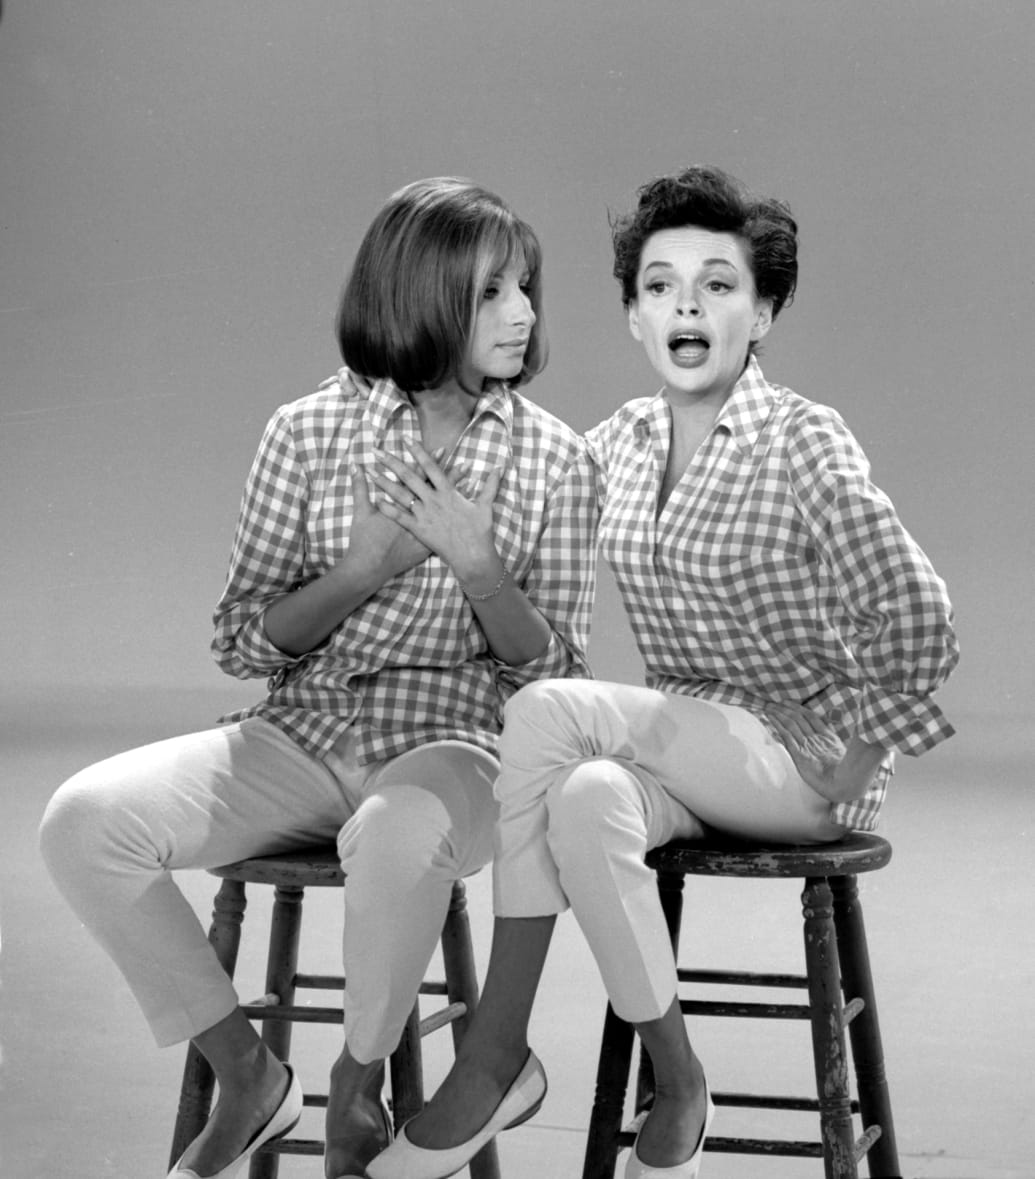 Barbra Streisand and Judy Garland in 1963